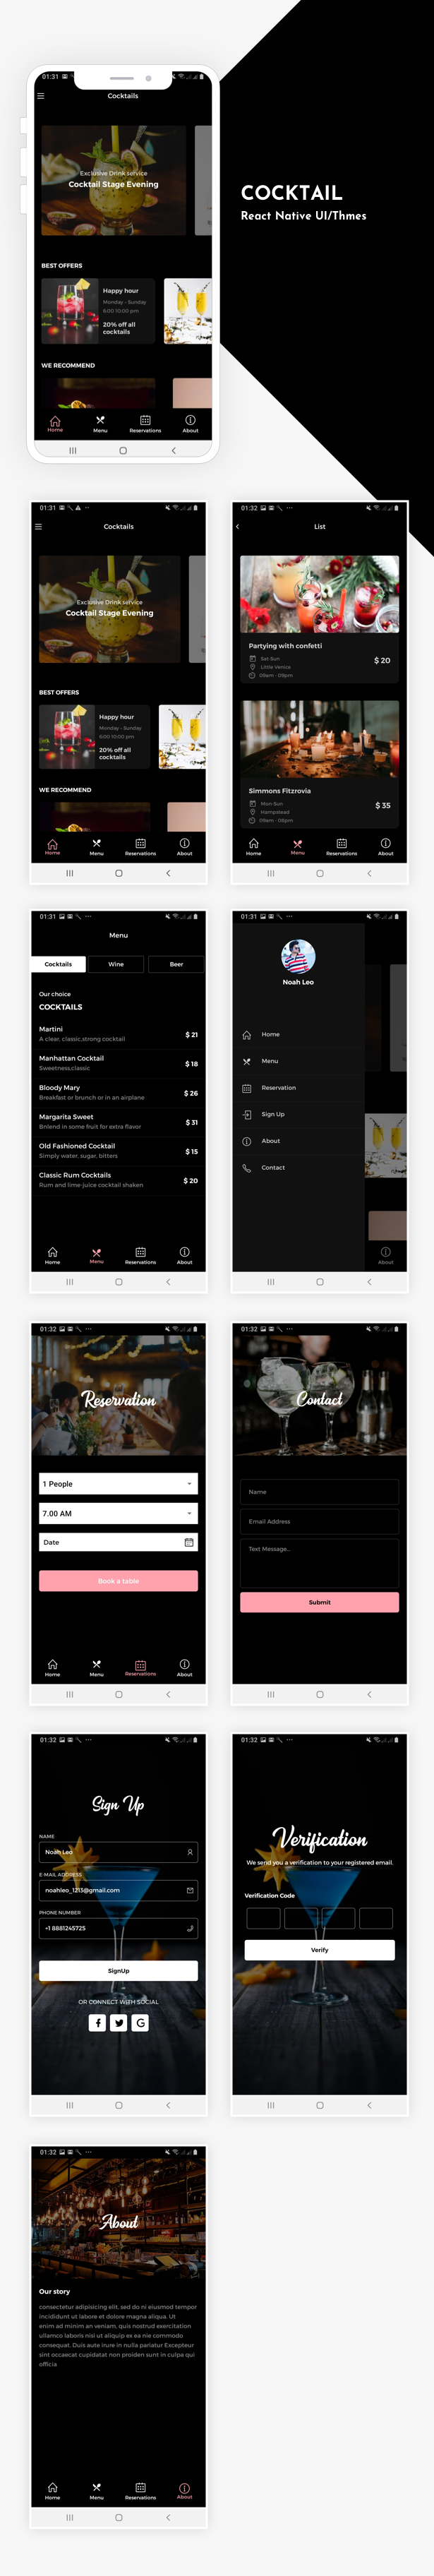 Cocktail Bar App UI